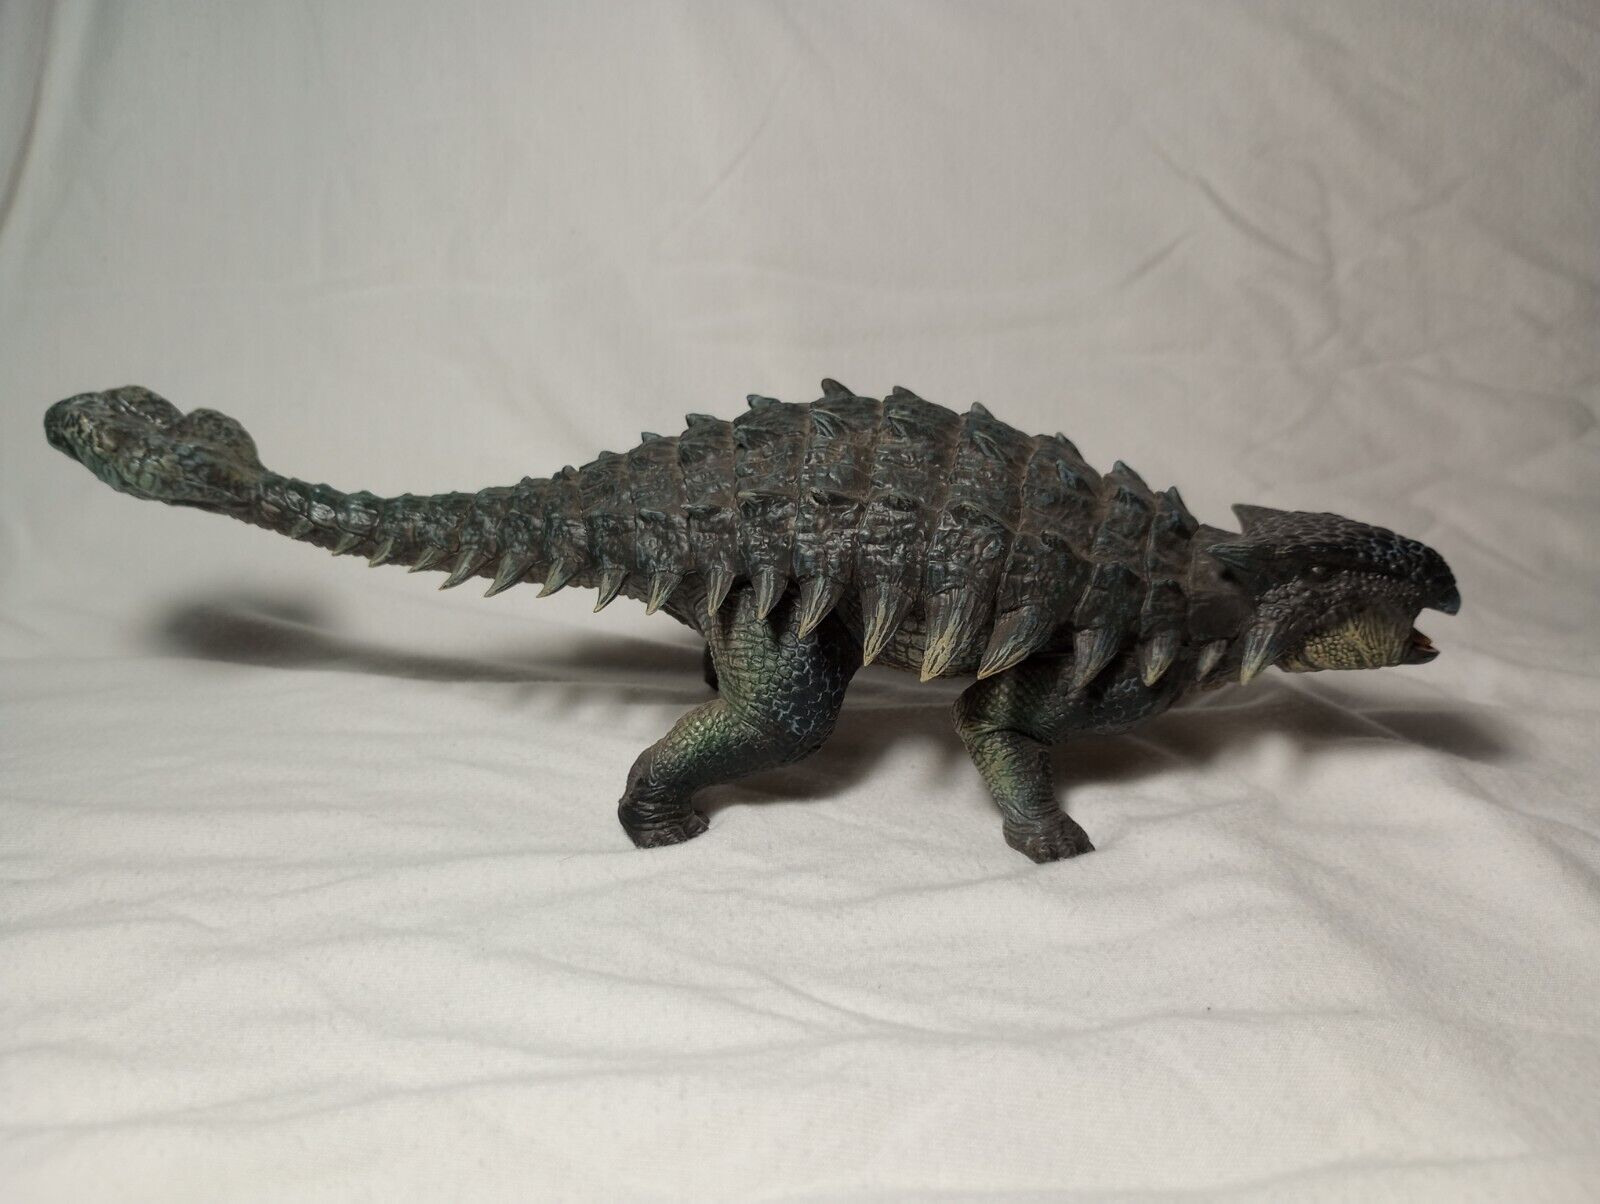 Nanmu Jurassic World Ankylosaurus - 1/35 Dinosaur Statue Figure